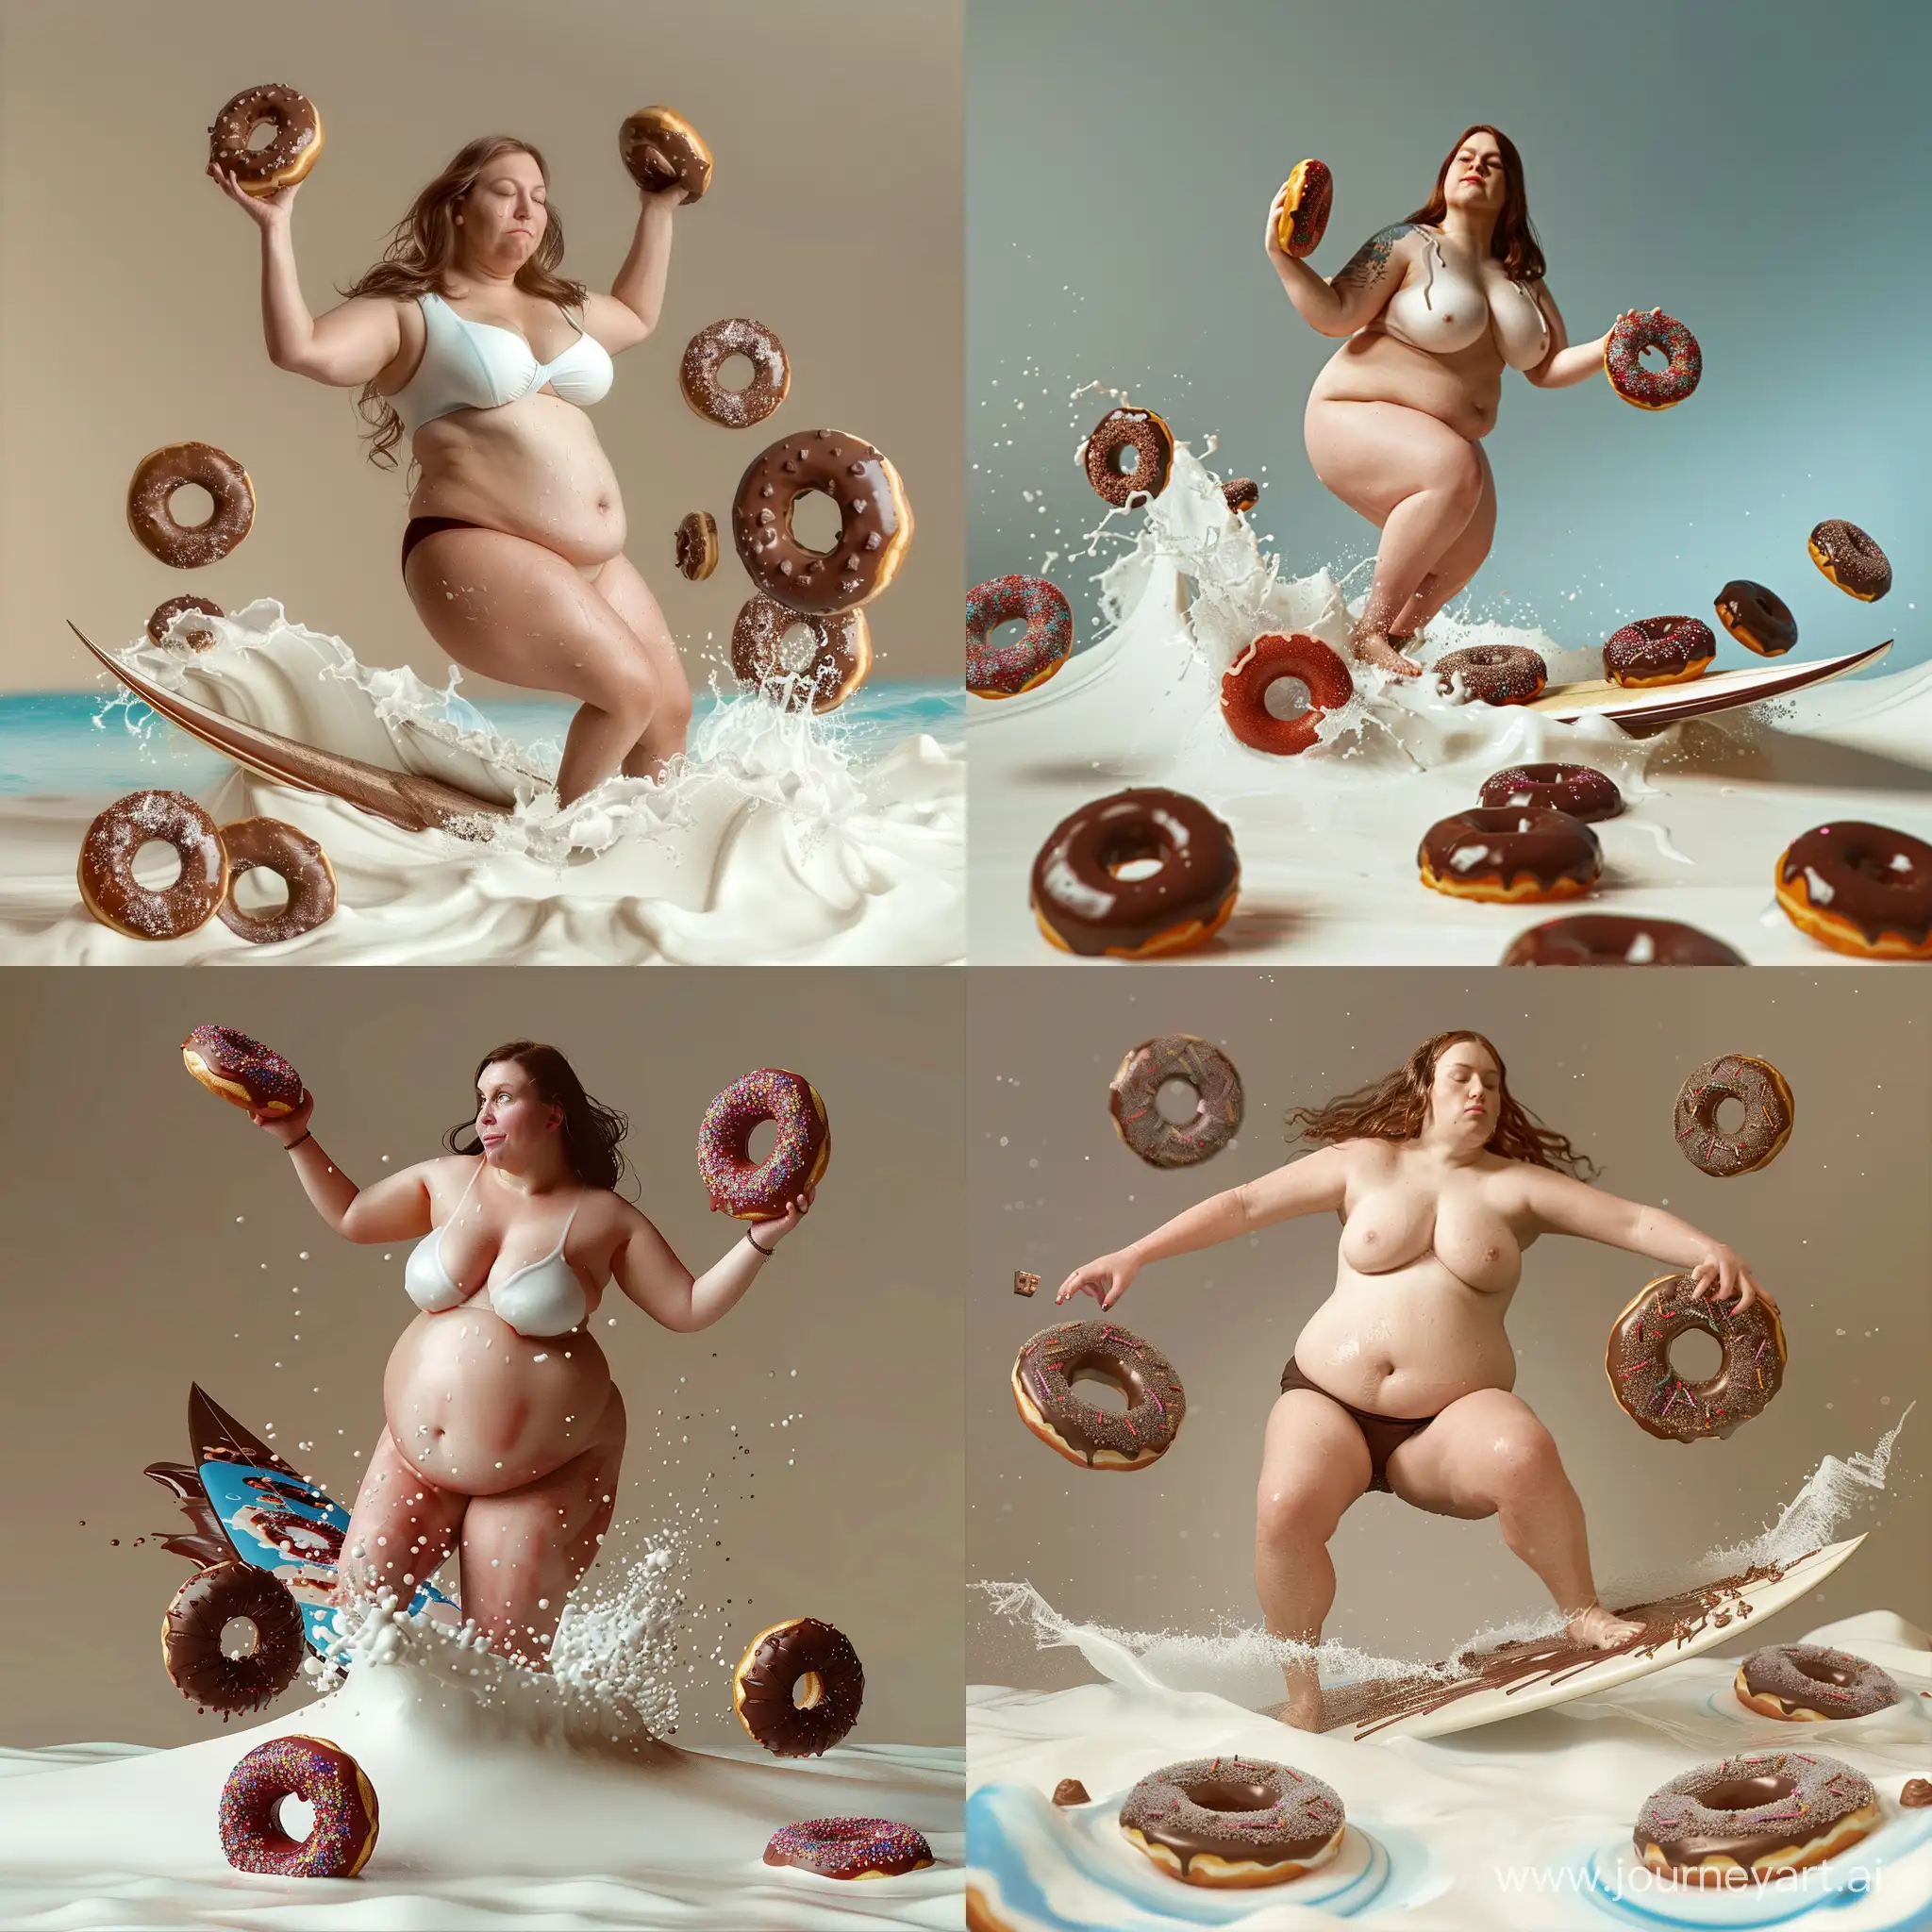 Chubby-Woman-Enjoying-Chocolate-Donuts-Surfing-on-Milk-Ocean